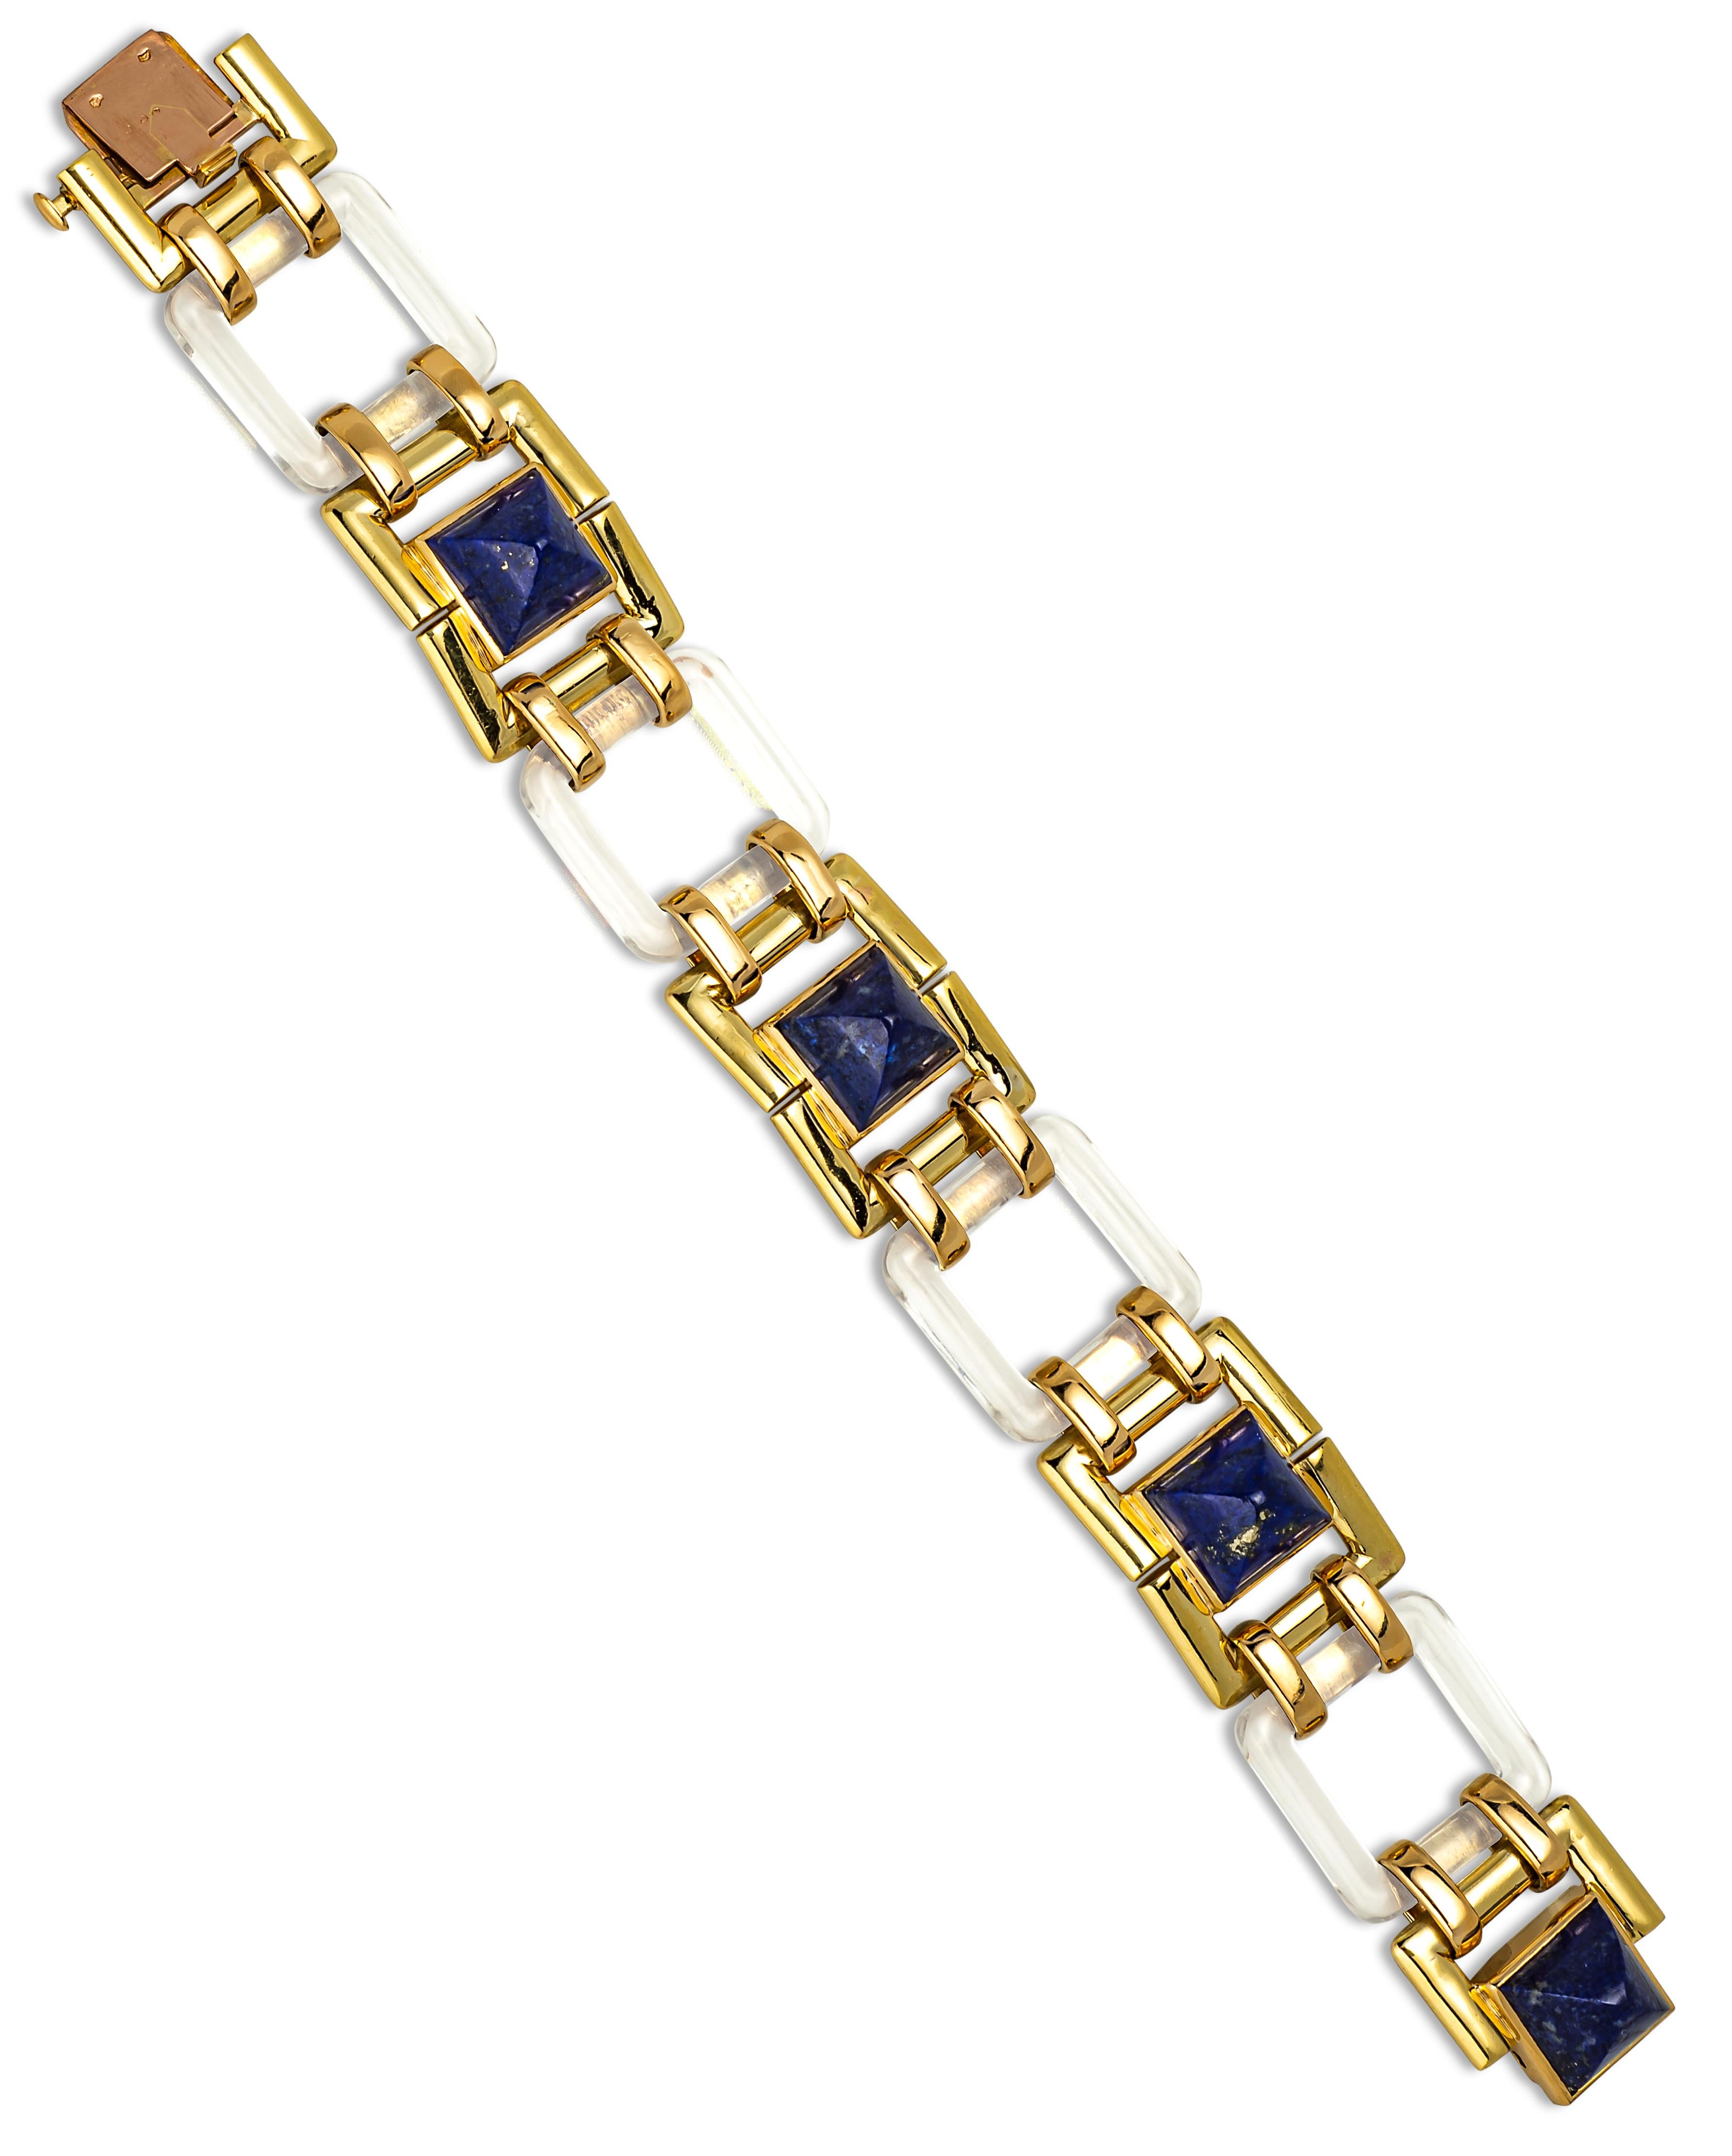 18K Gold Lapis and Rock Crystal Bracelet; Cartier, Paris; No.02533; Circa 1940
with original fitted box  